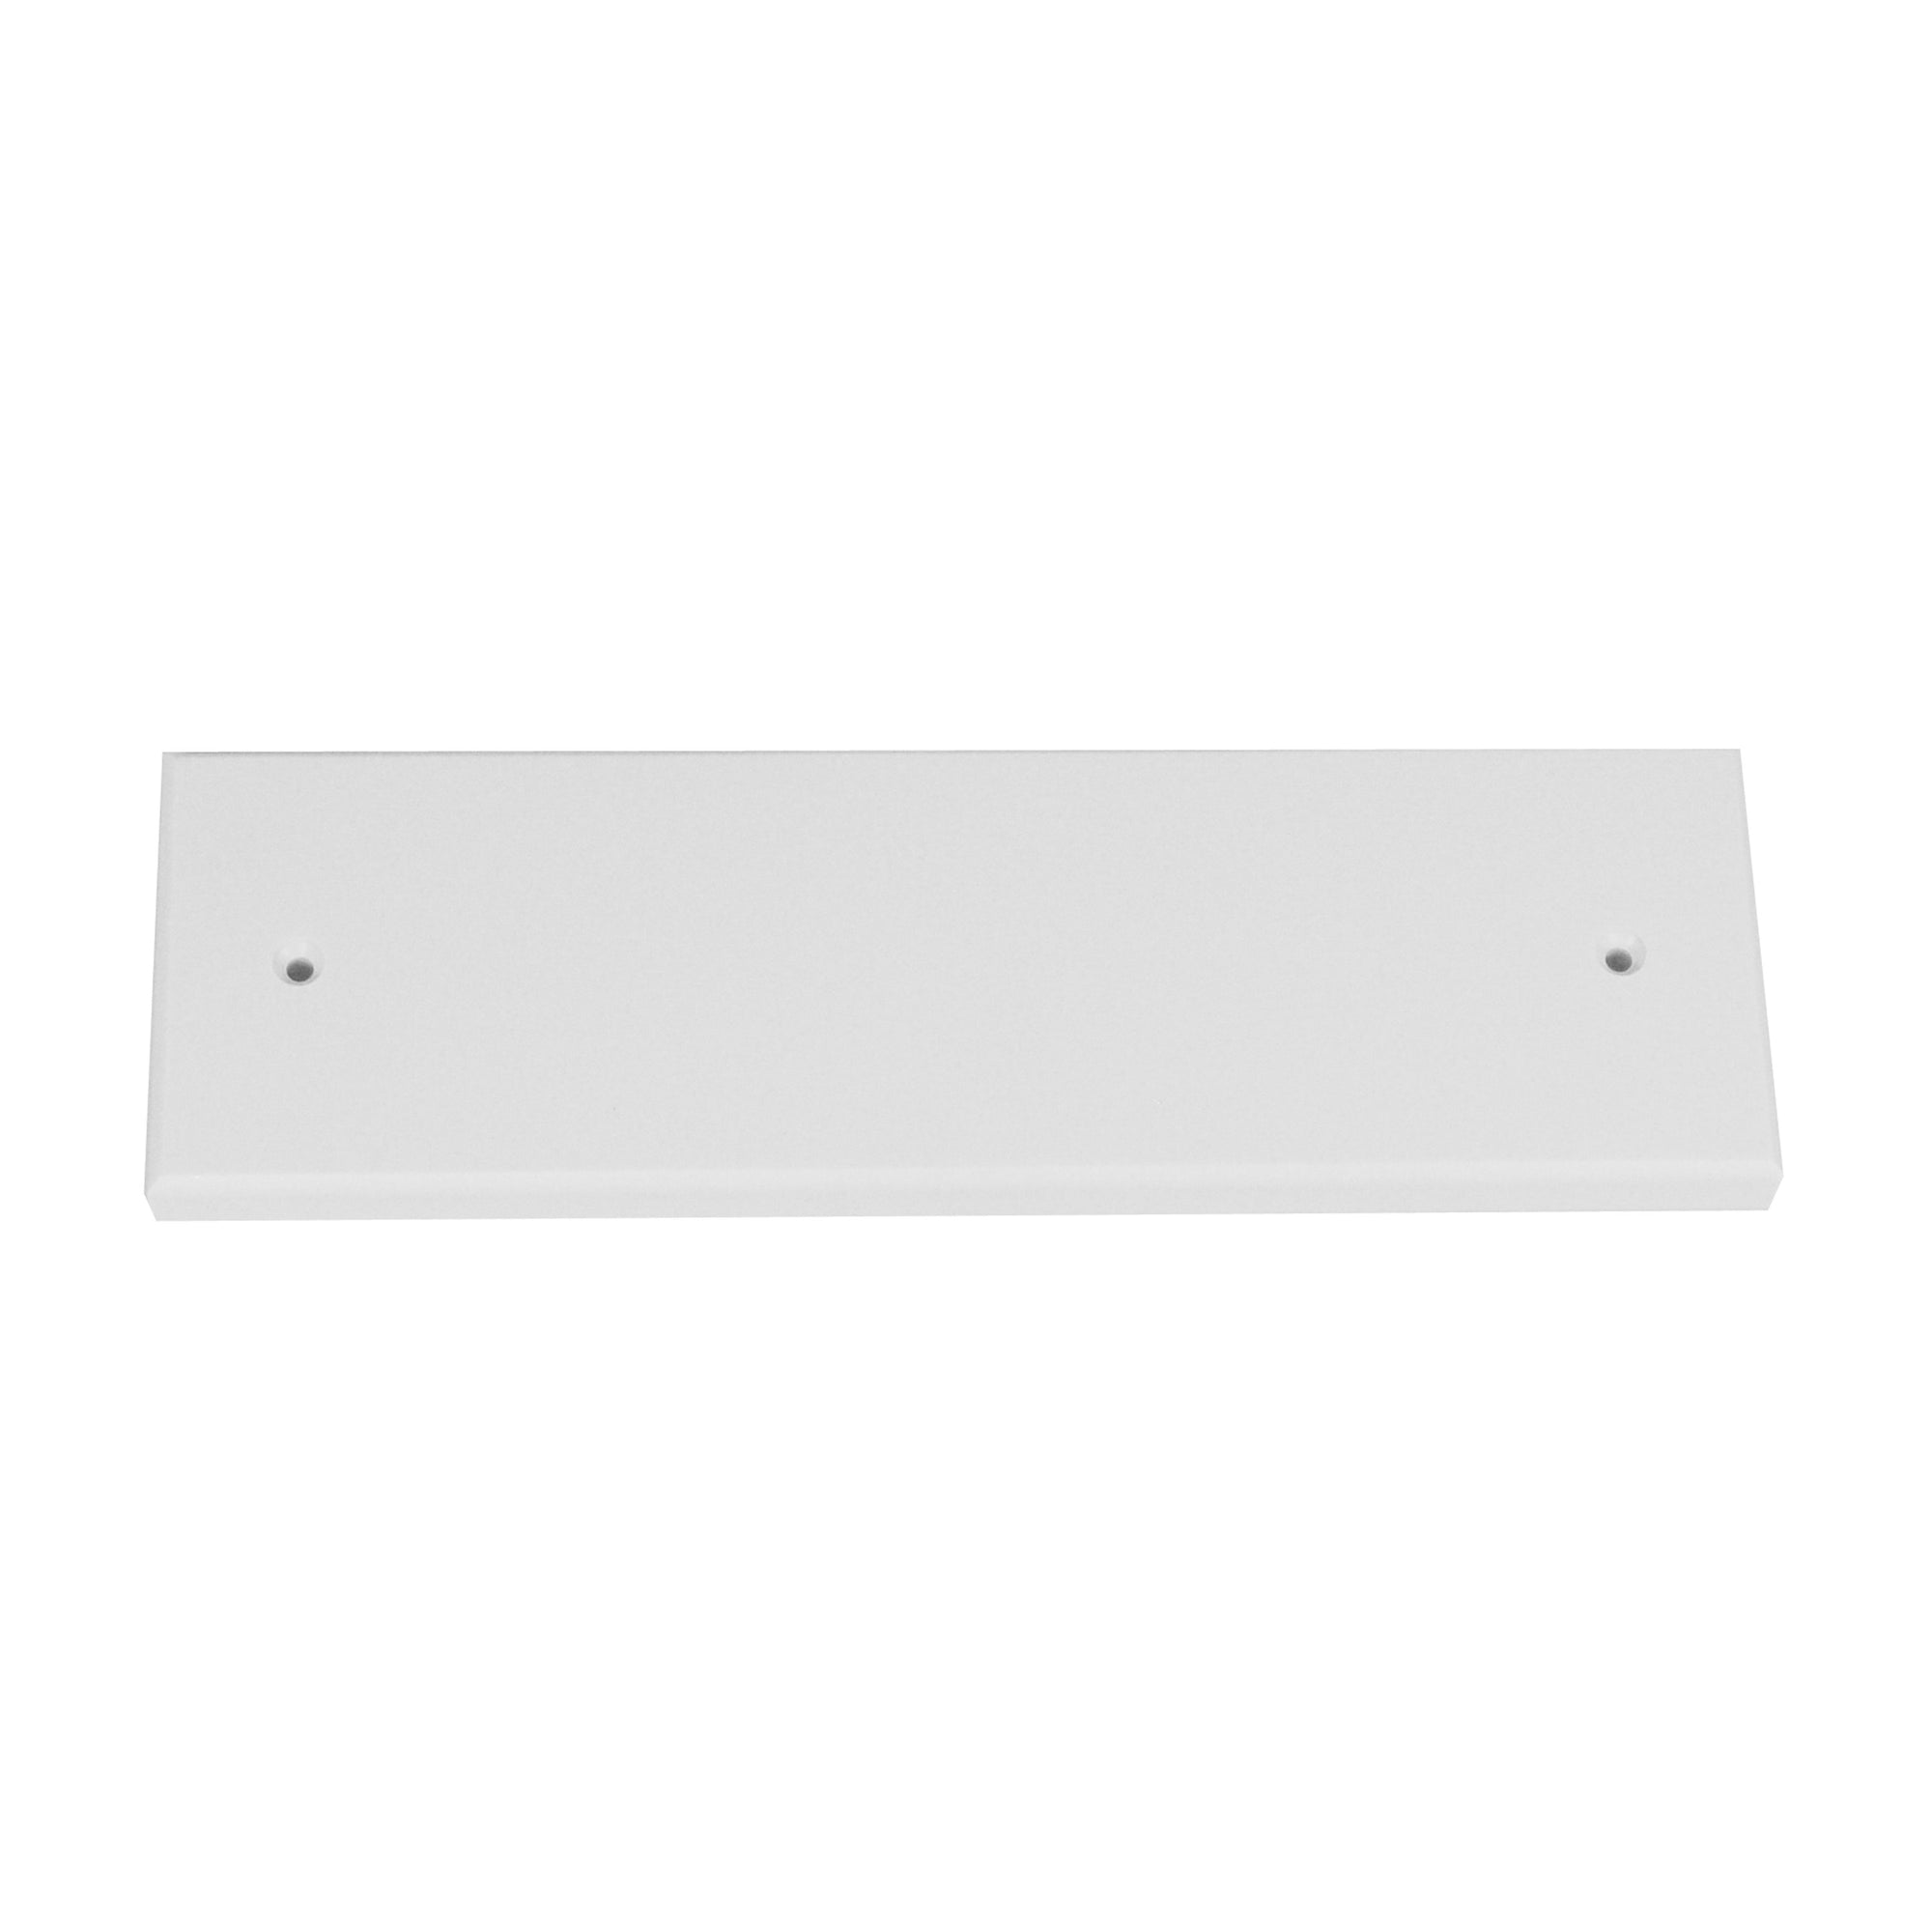 Rig Rite 930 Horizontal Transducer Plate - 4" x 18", Gray